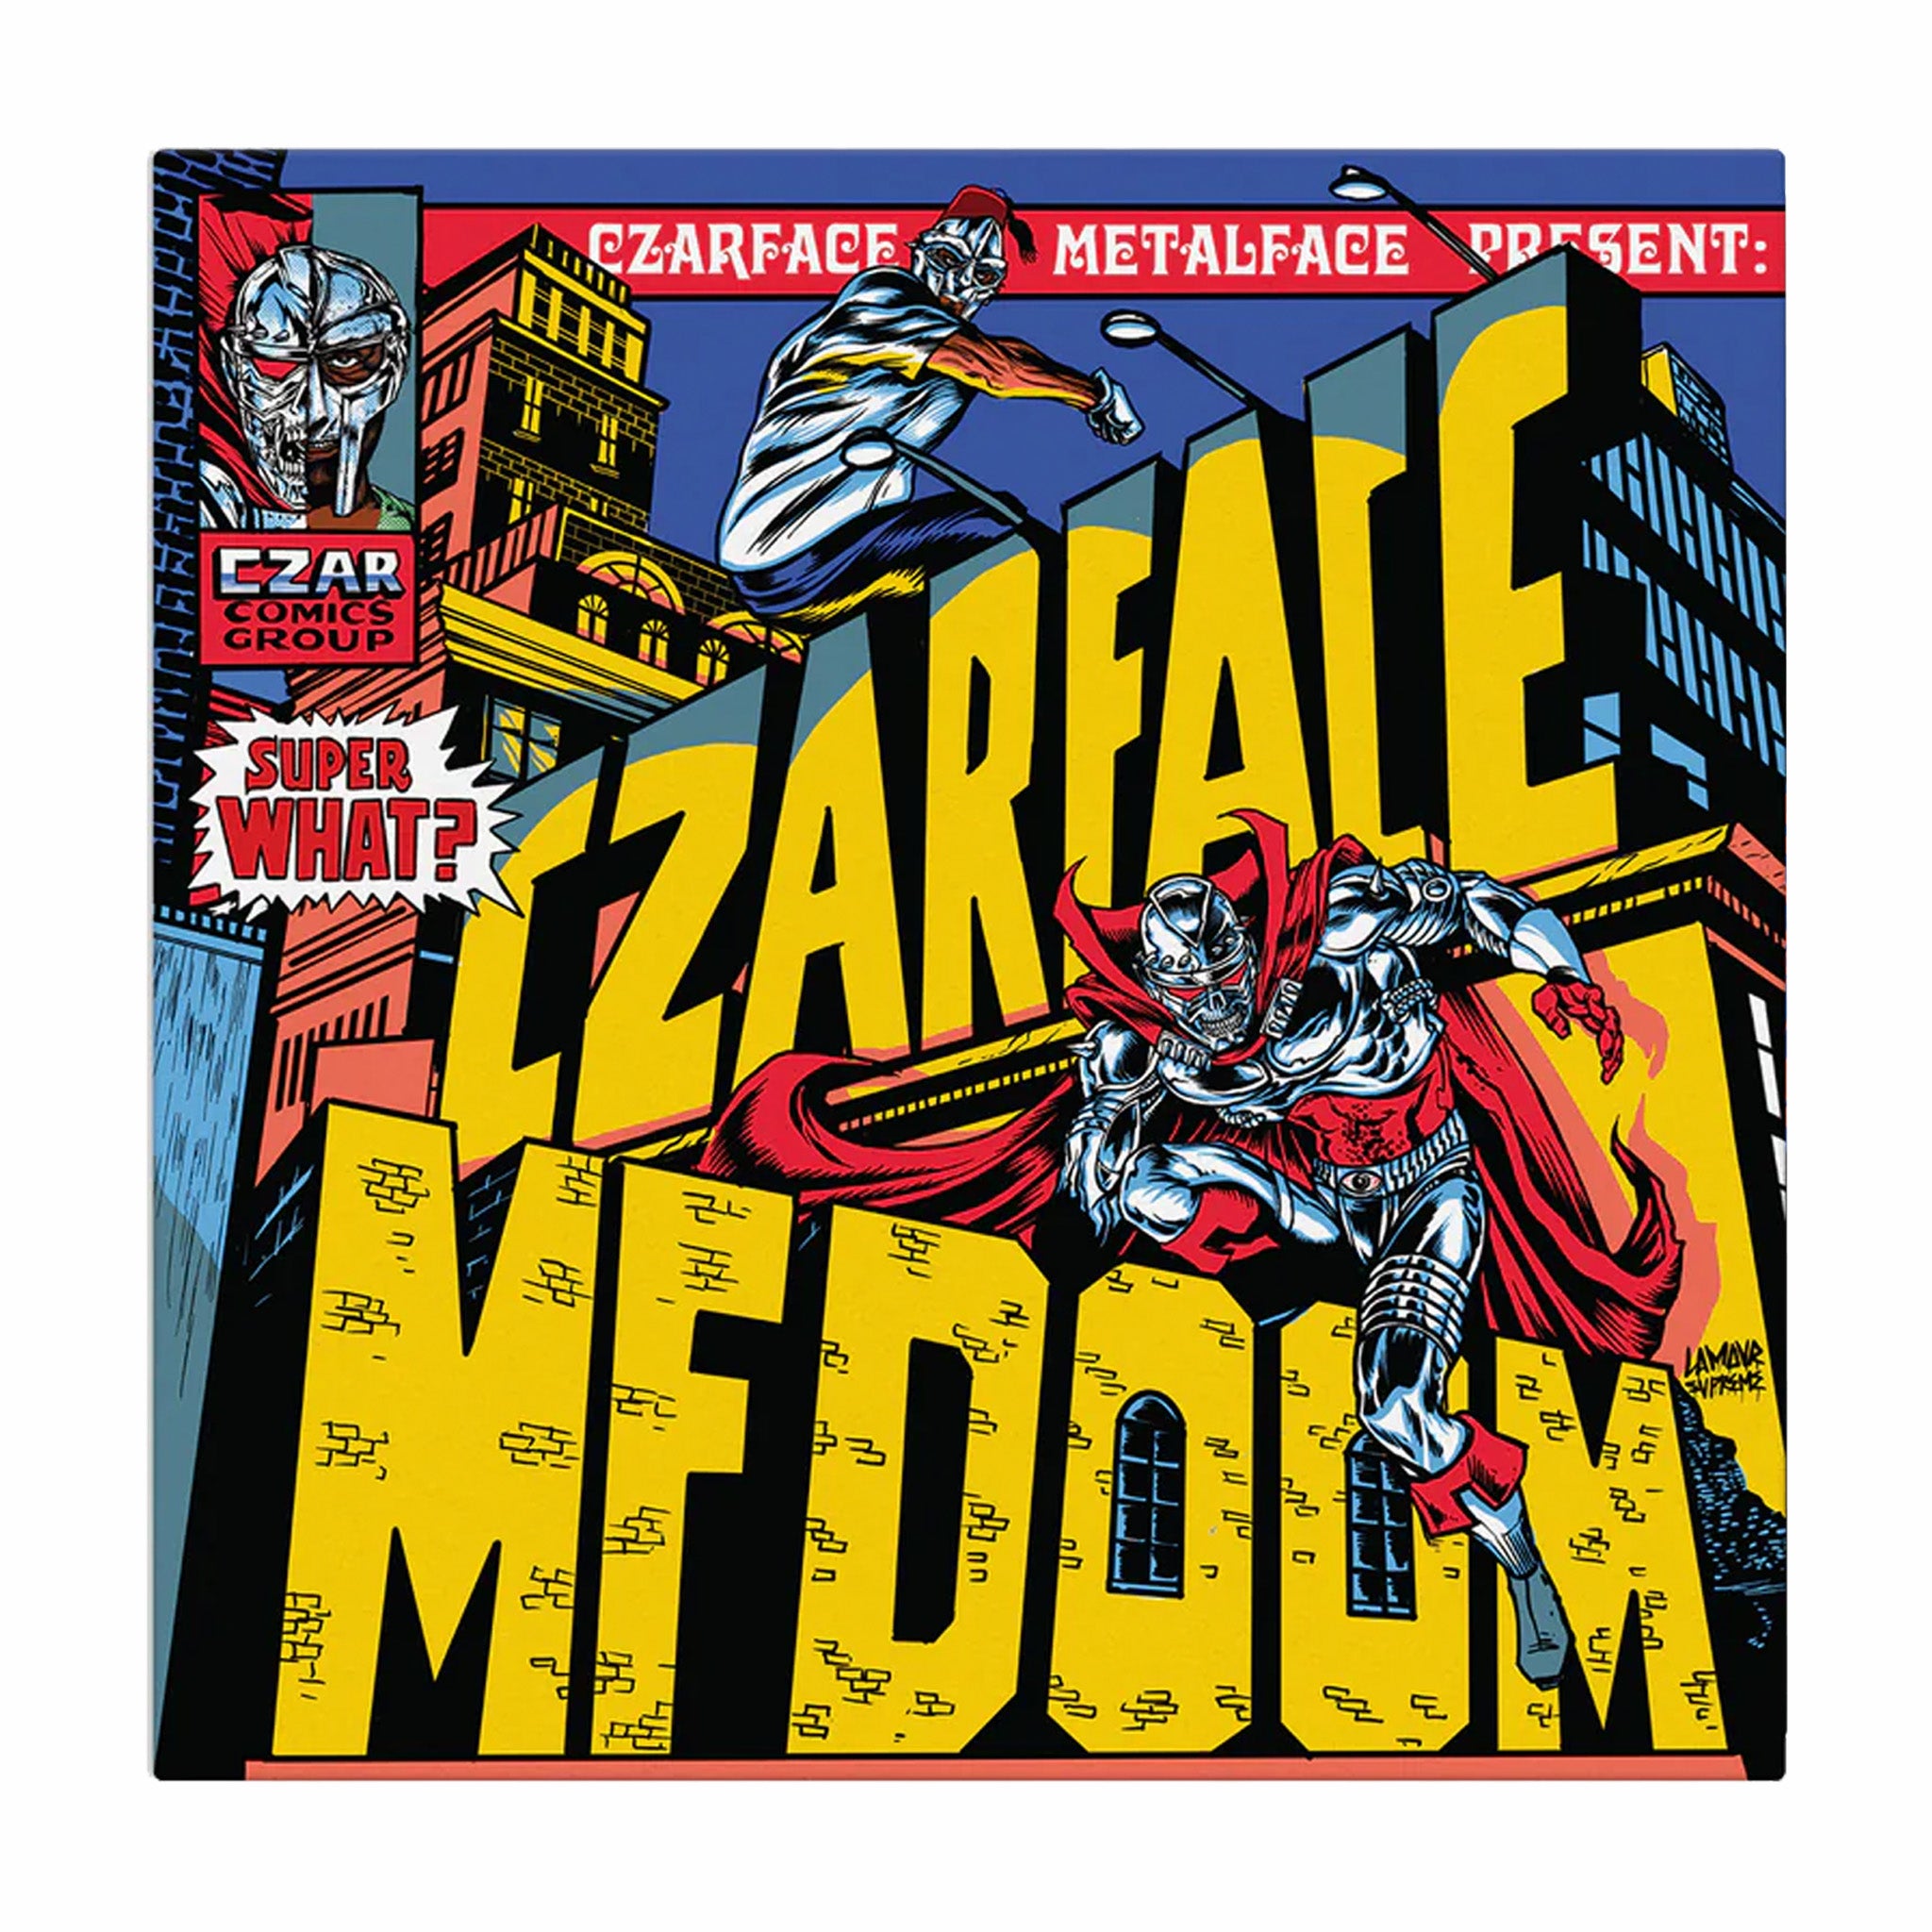 In vinile, Czarface & MF DOOM "Super Cosa? LP